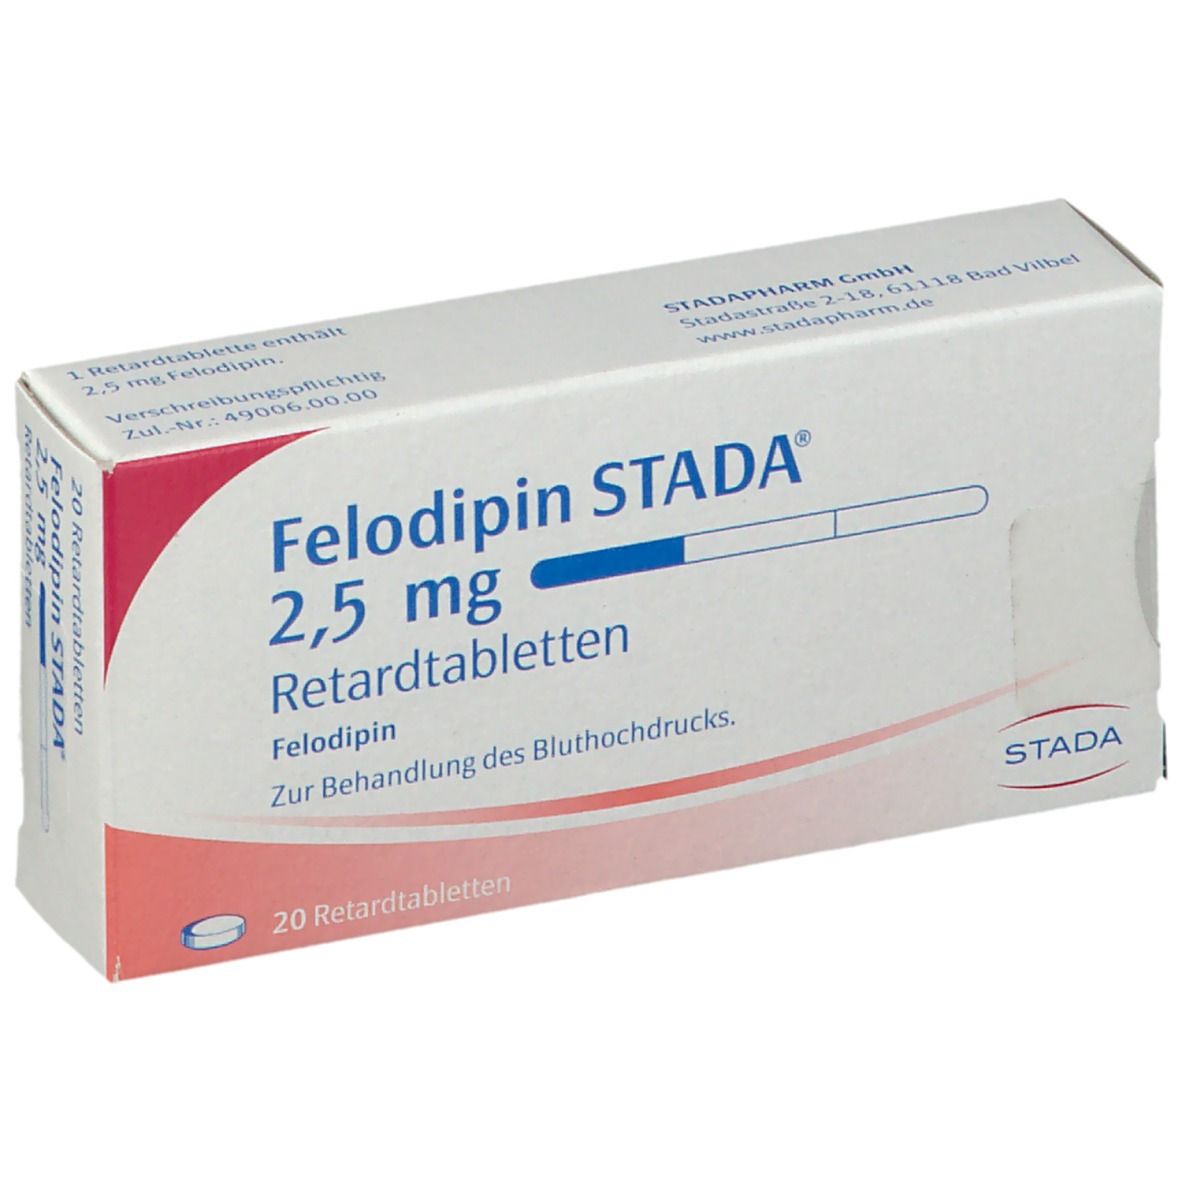 Felodipin STADA® 2,5 mg